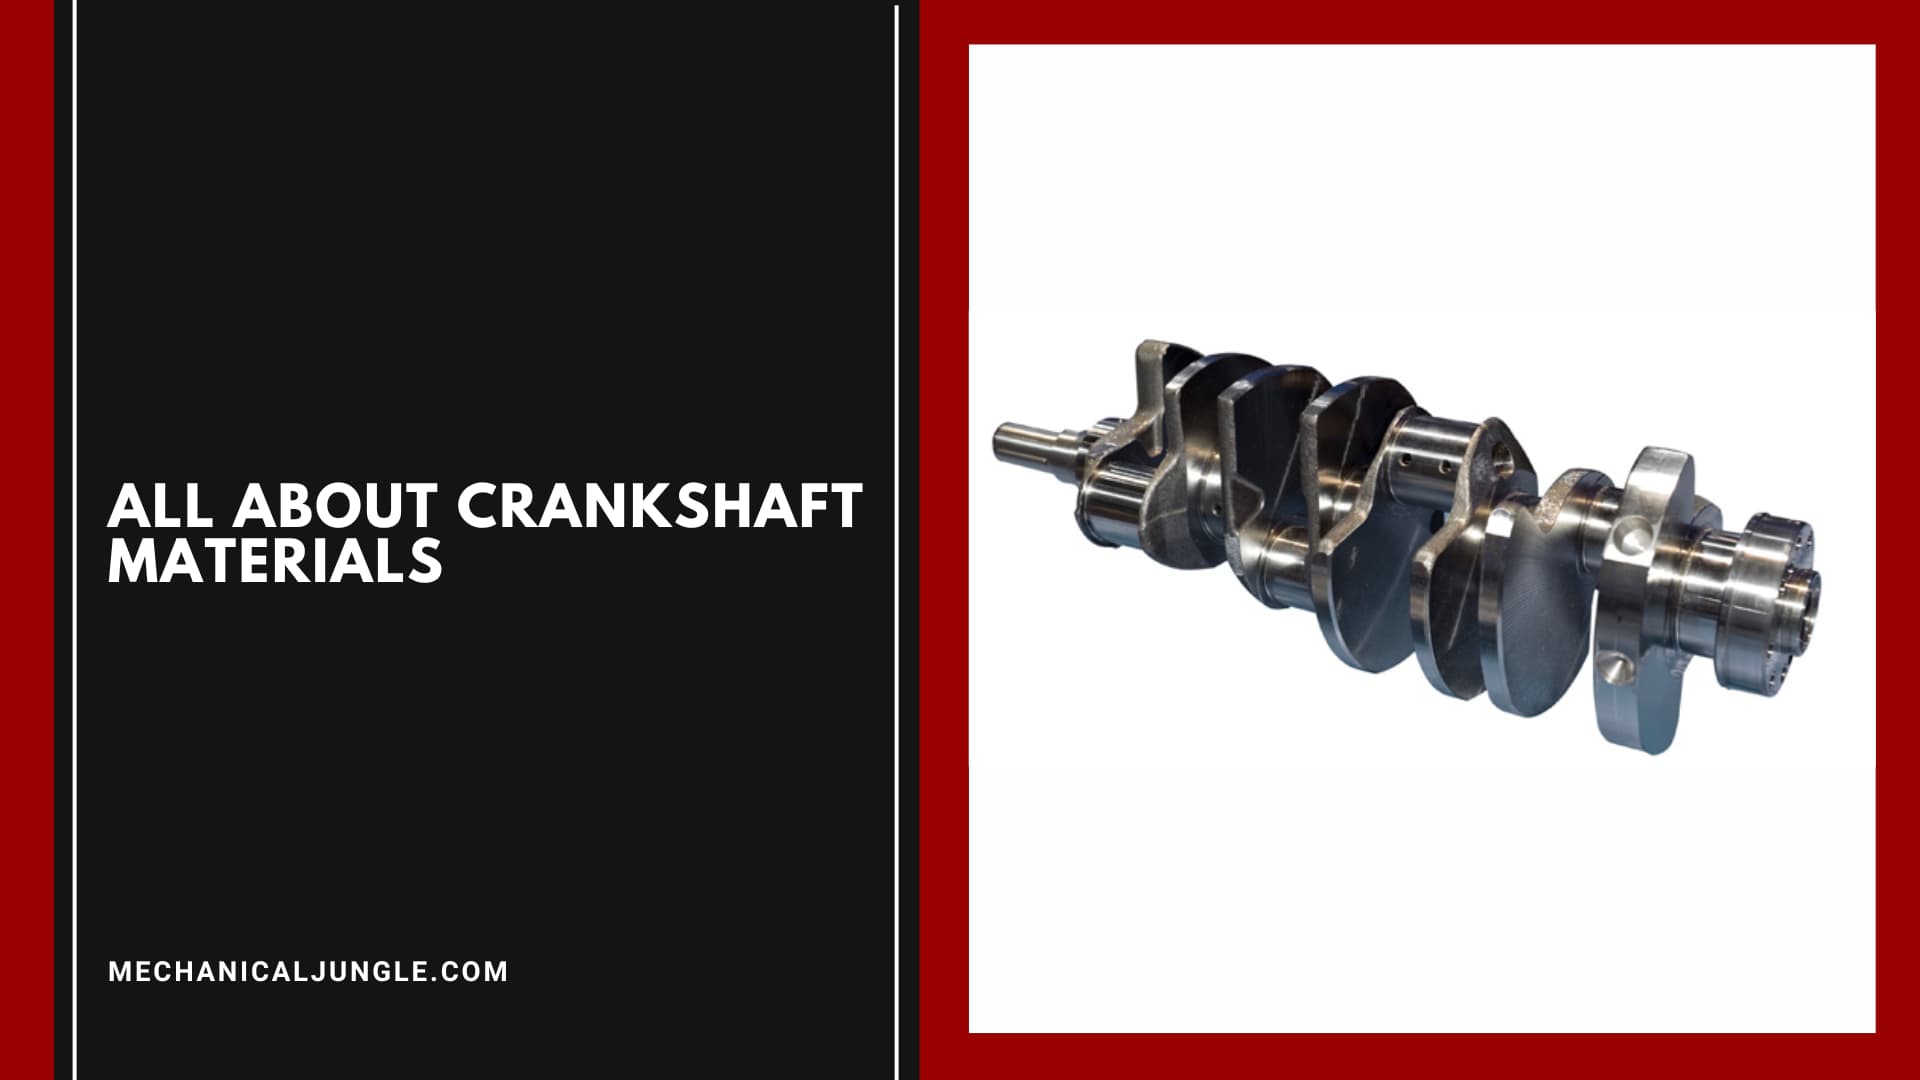 All About Crankshaft Materials